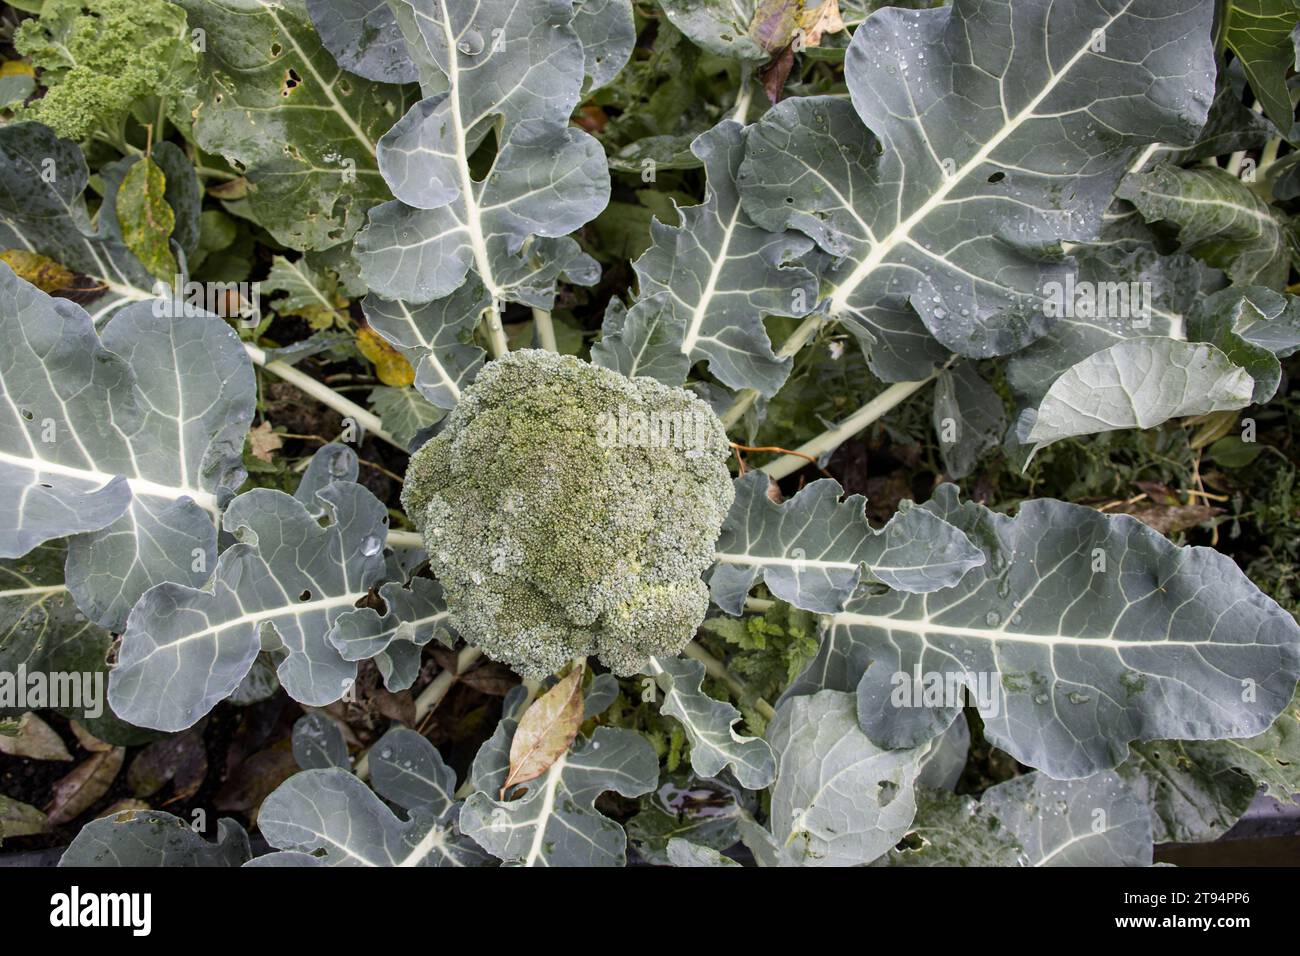 Brokkoli, Broccoli (Brassica oleracea var. italica) Pflanze im Hochbeet Foto Stock